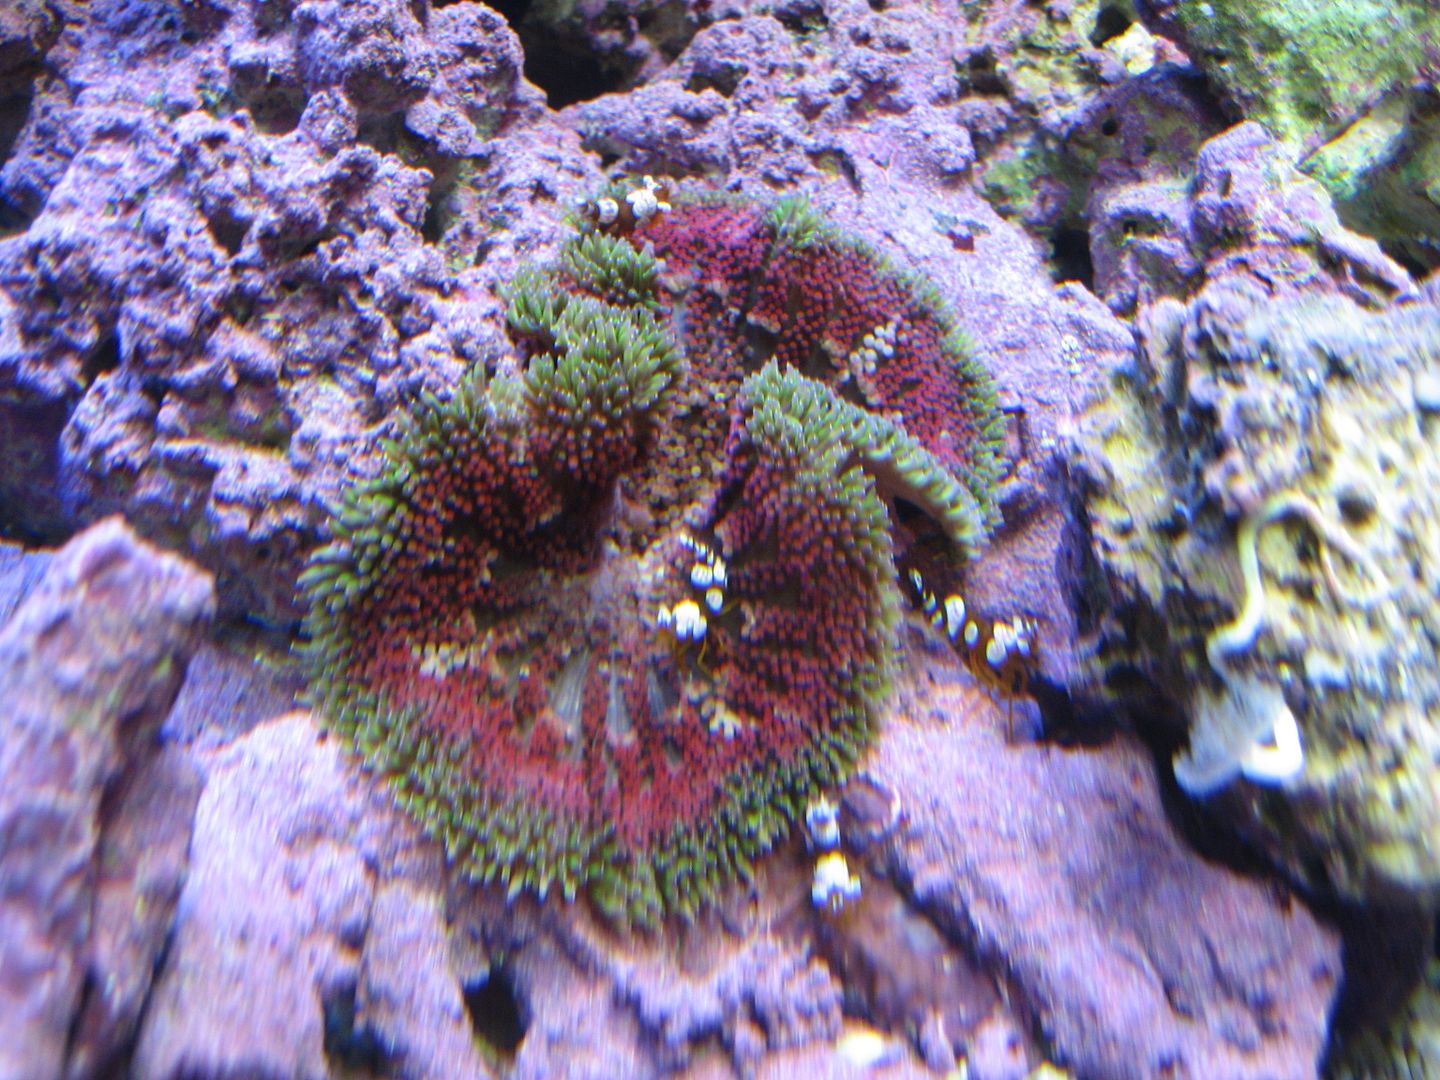 Aquarium_NewMMCAout_23APR2012.jpg